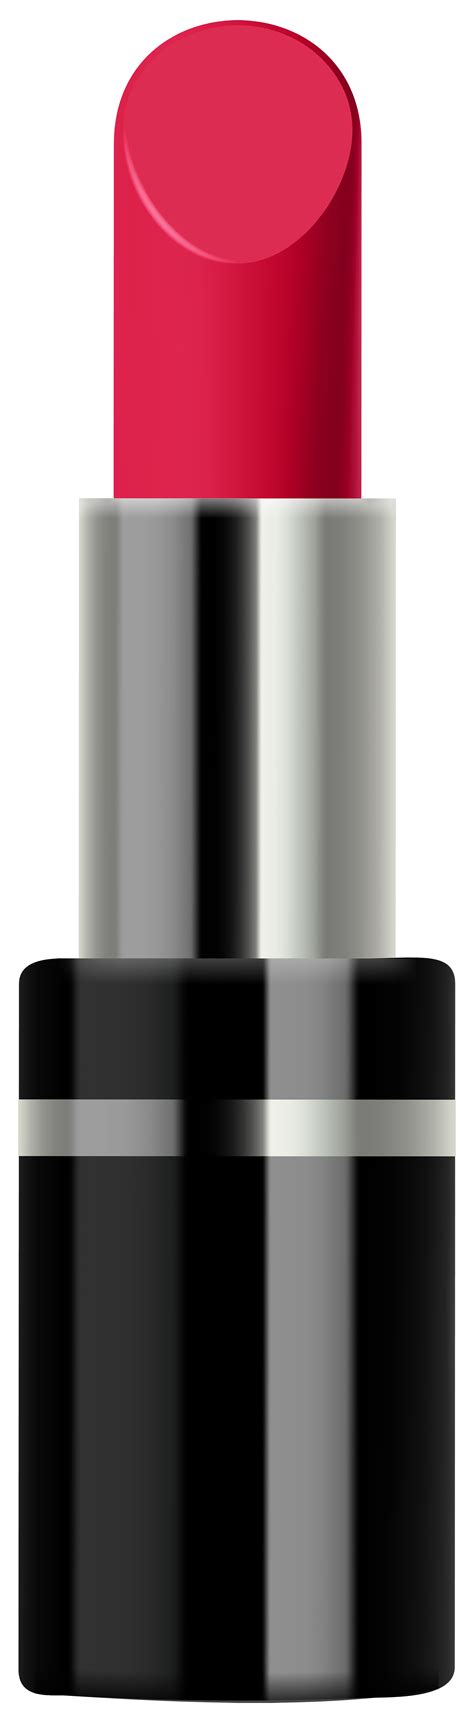 Lipstick Cosmetics Clip Art Red Lipstick PNG Transparent Clip Art Image Png Download